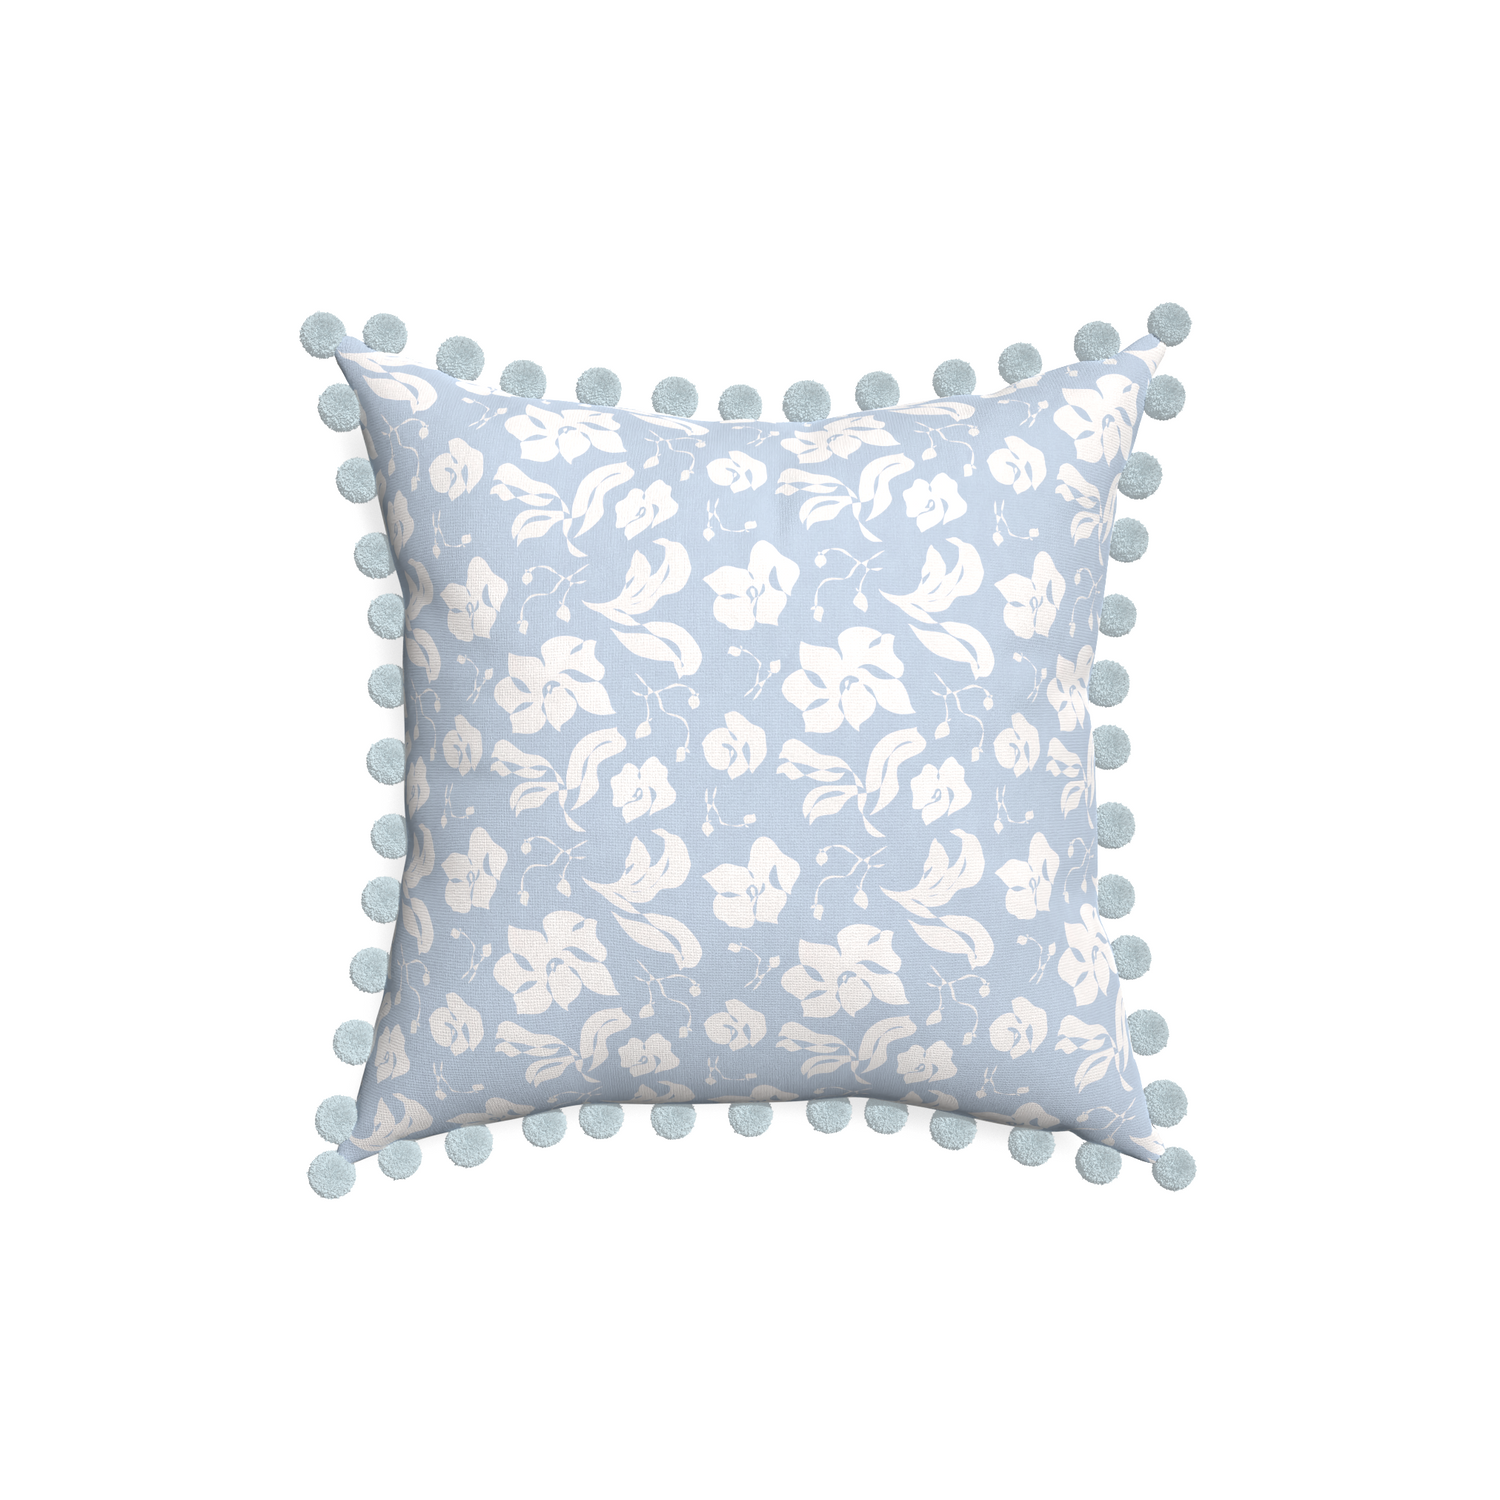 18-square georgia custom pillow with powder pom pom on white background